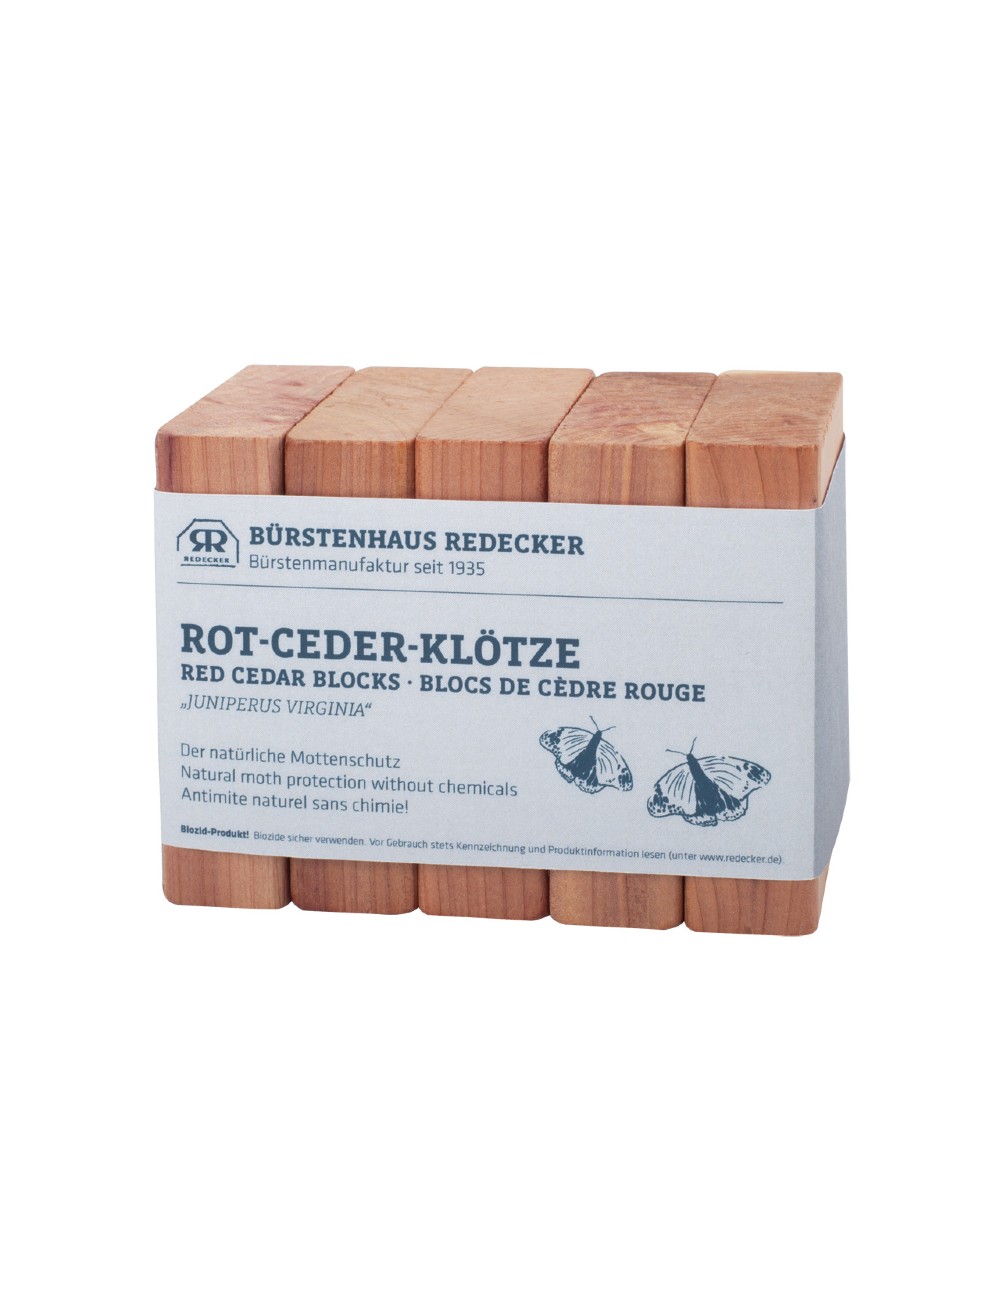 Cederträ Doftblock - 5 pack